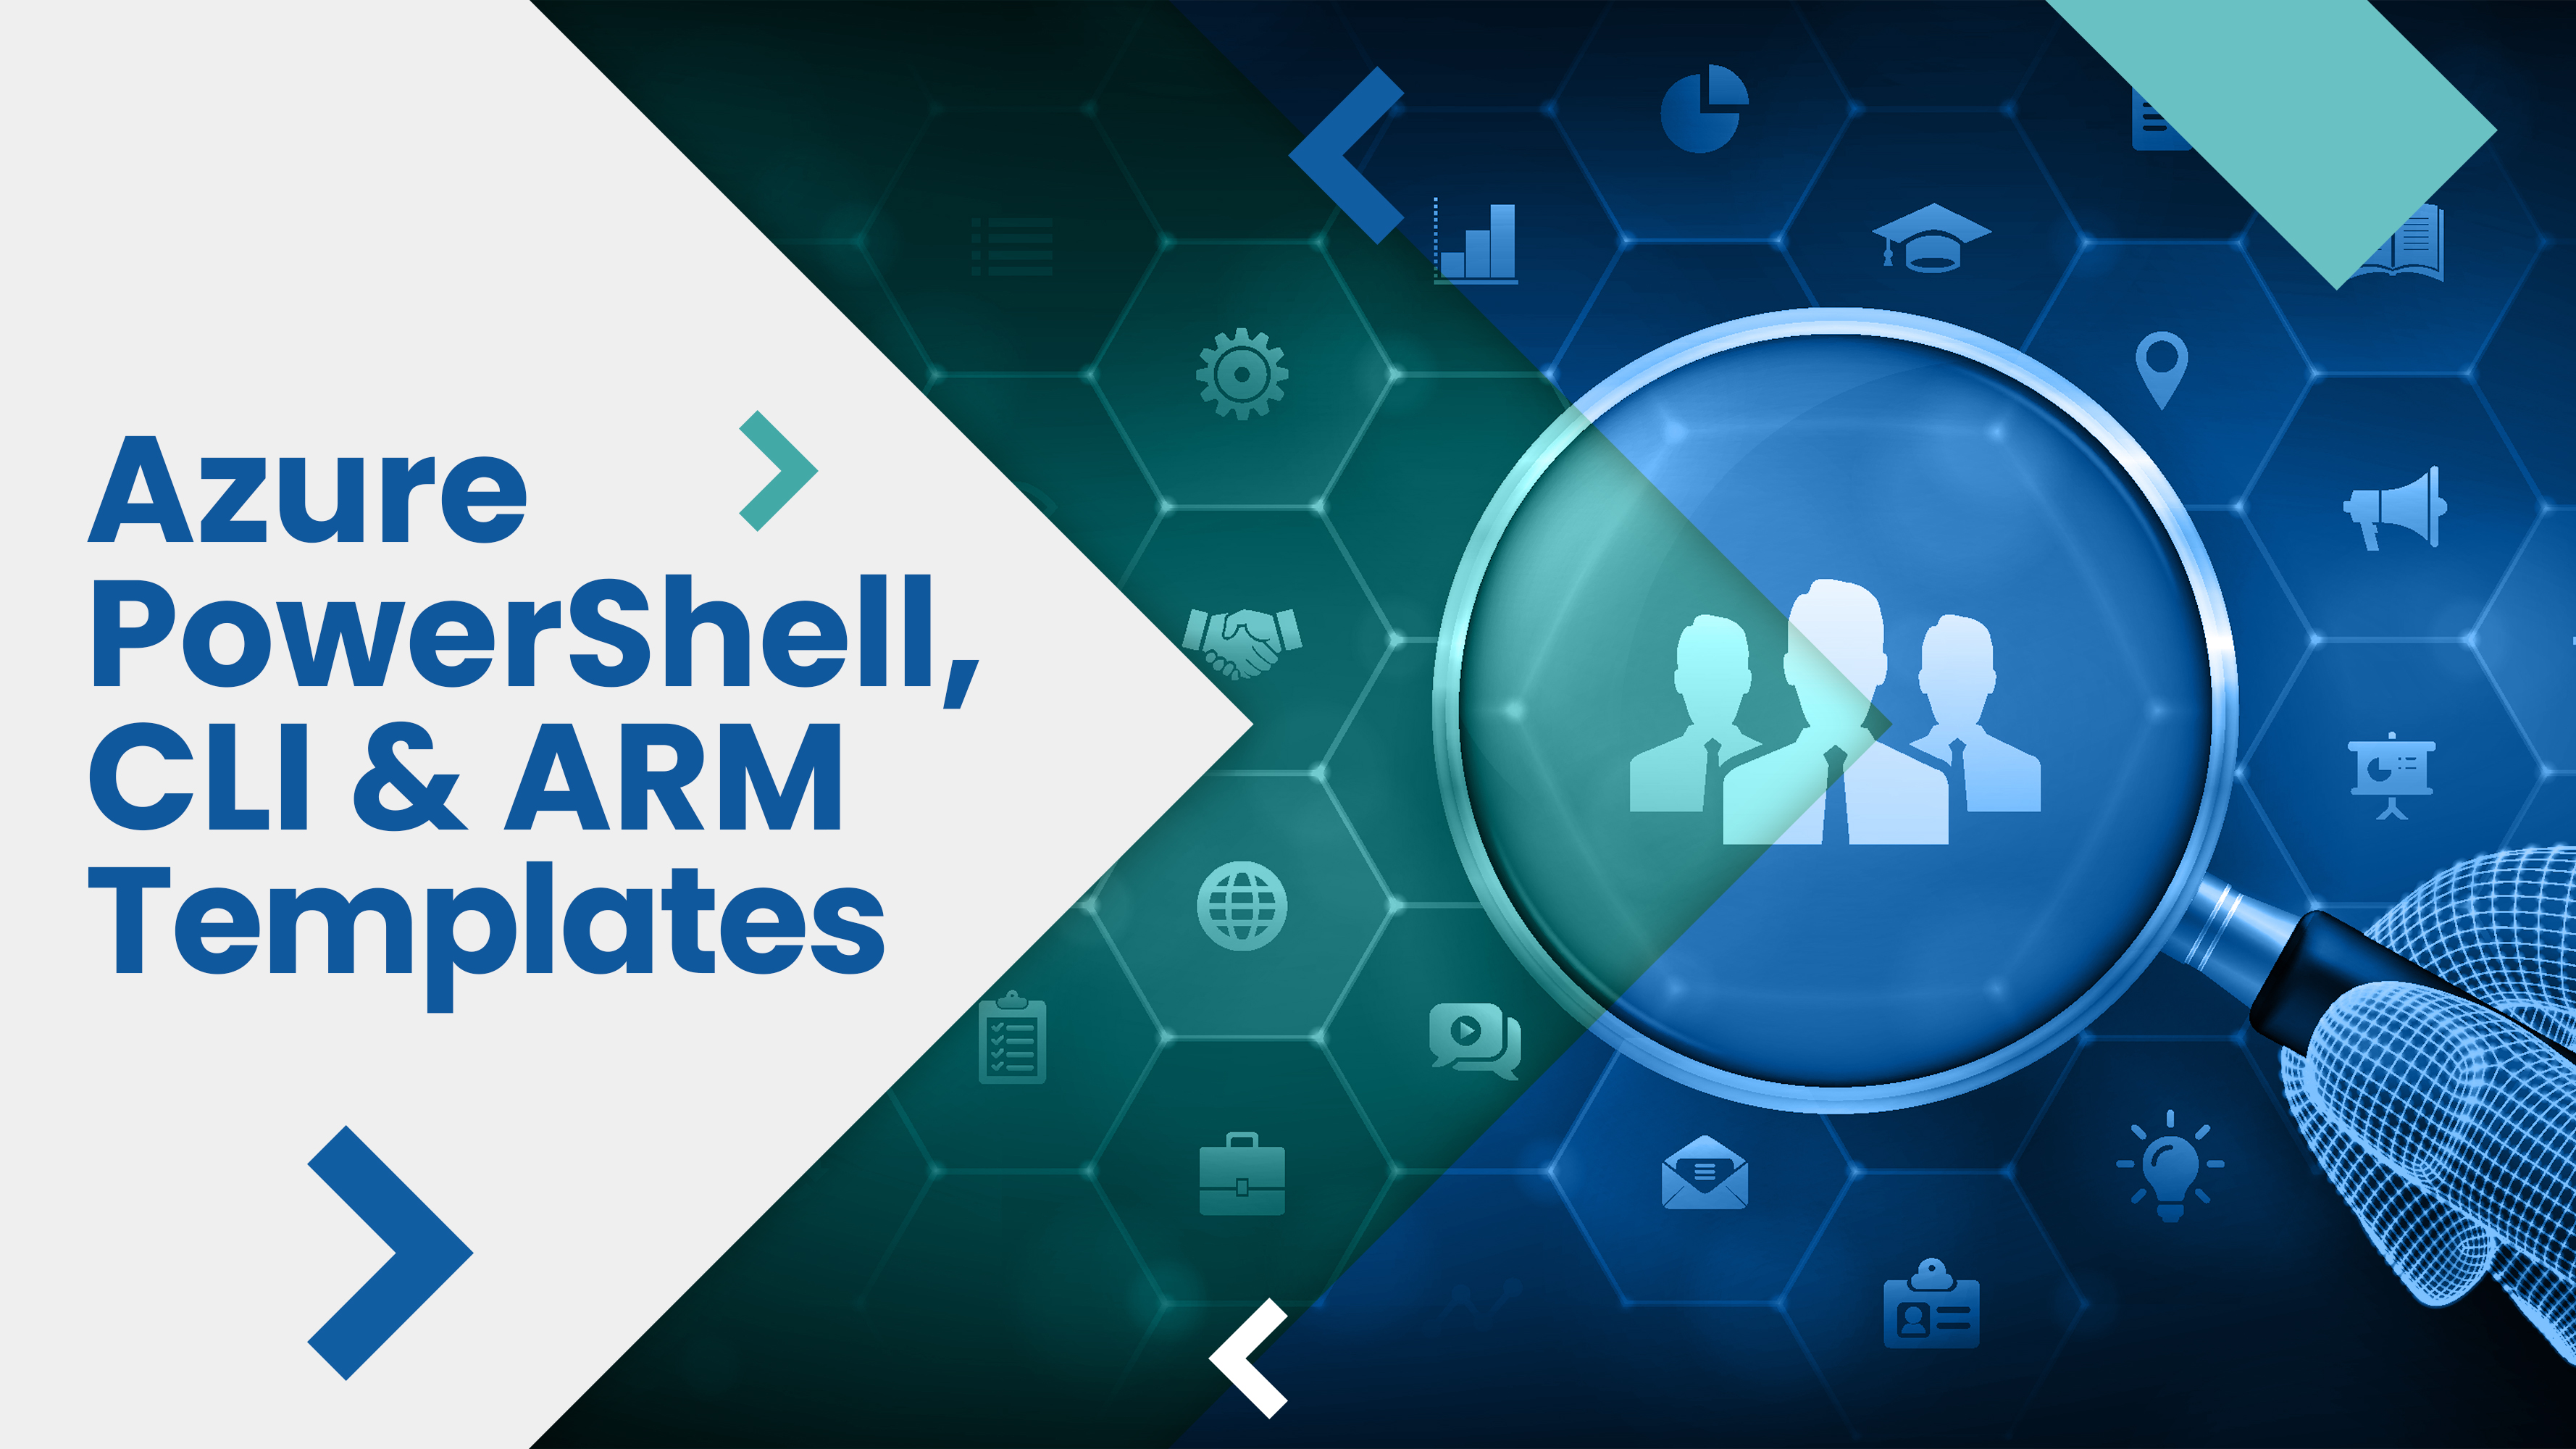 Azure PowerShell, CLI & ARM Templates